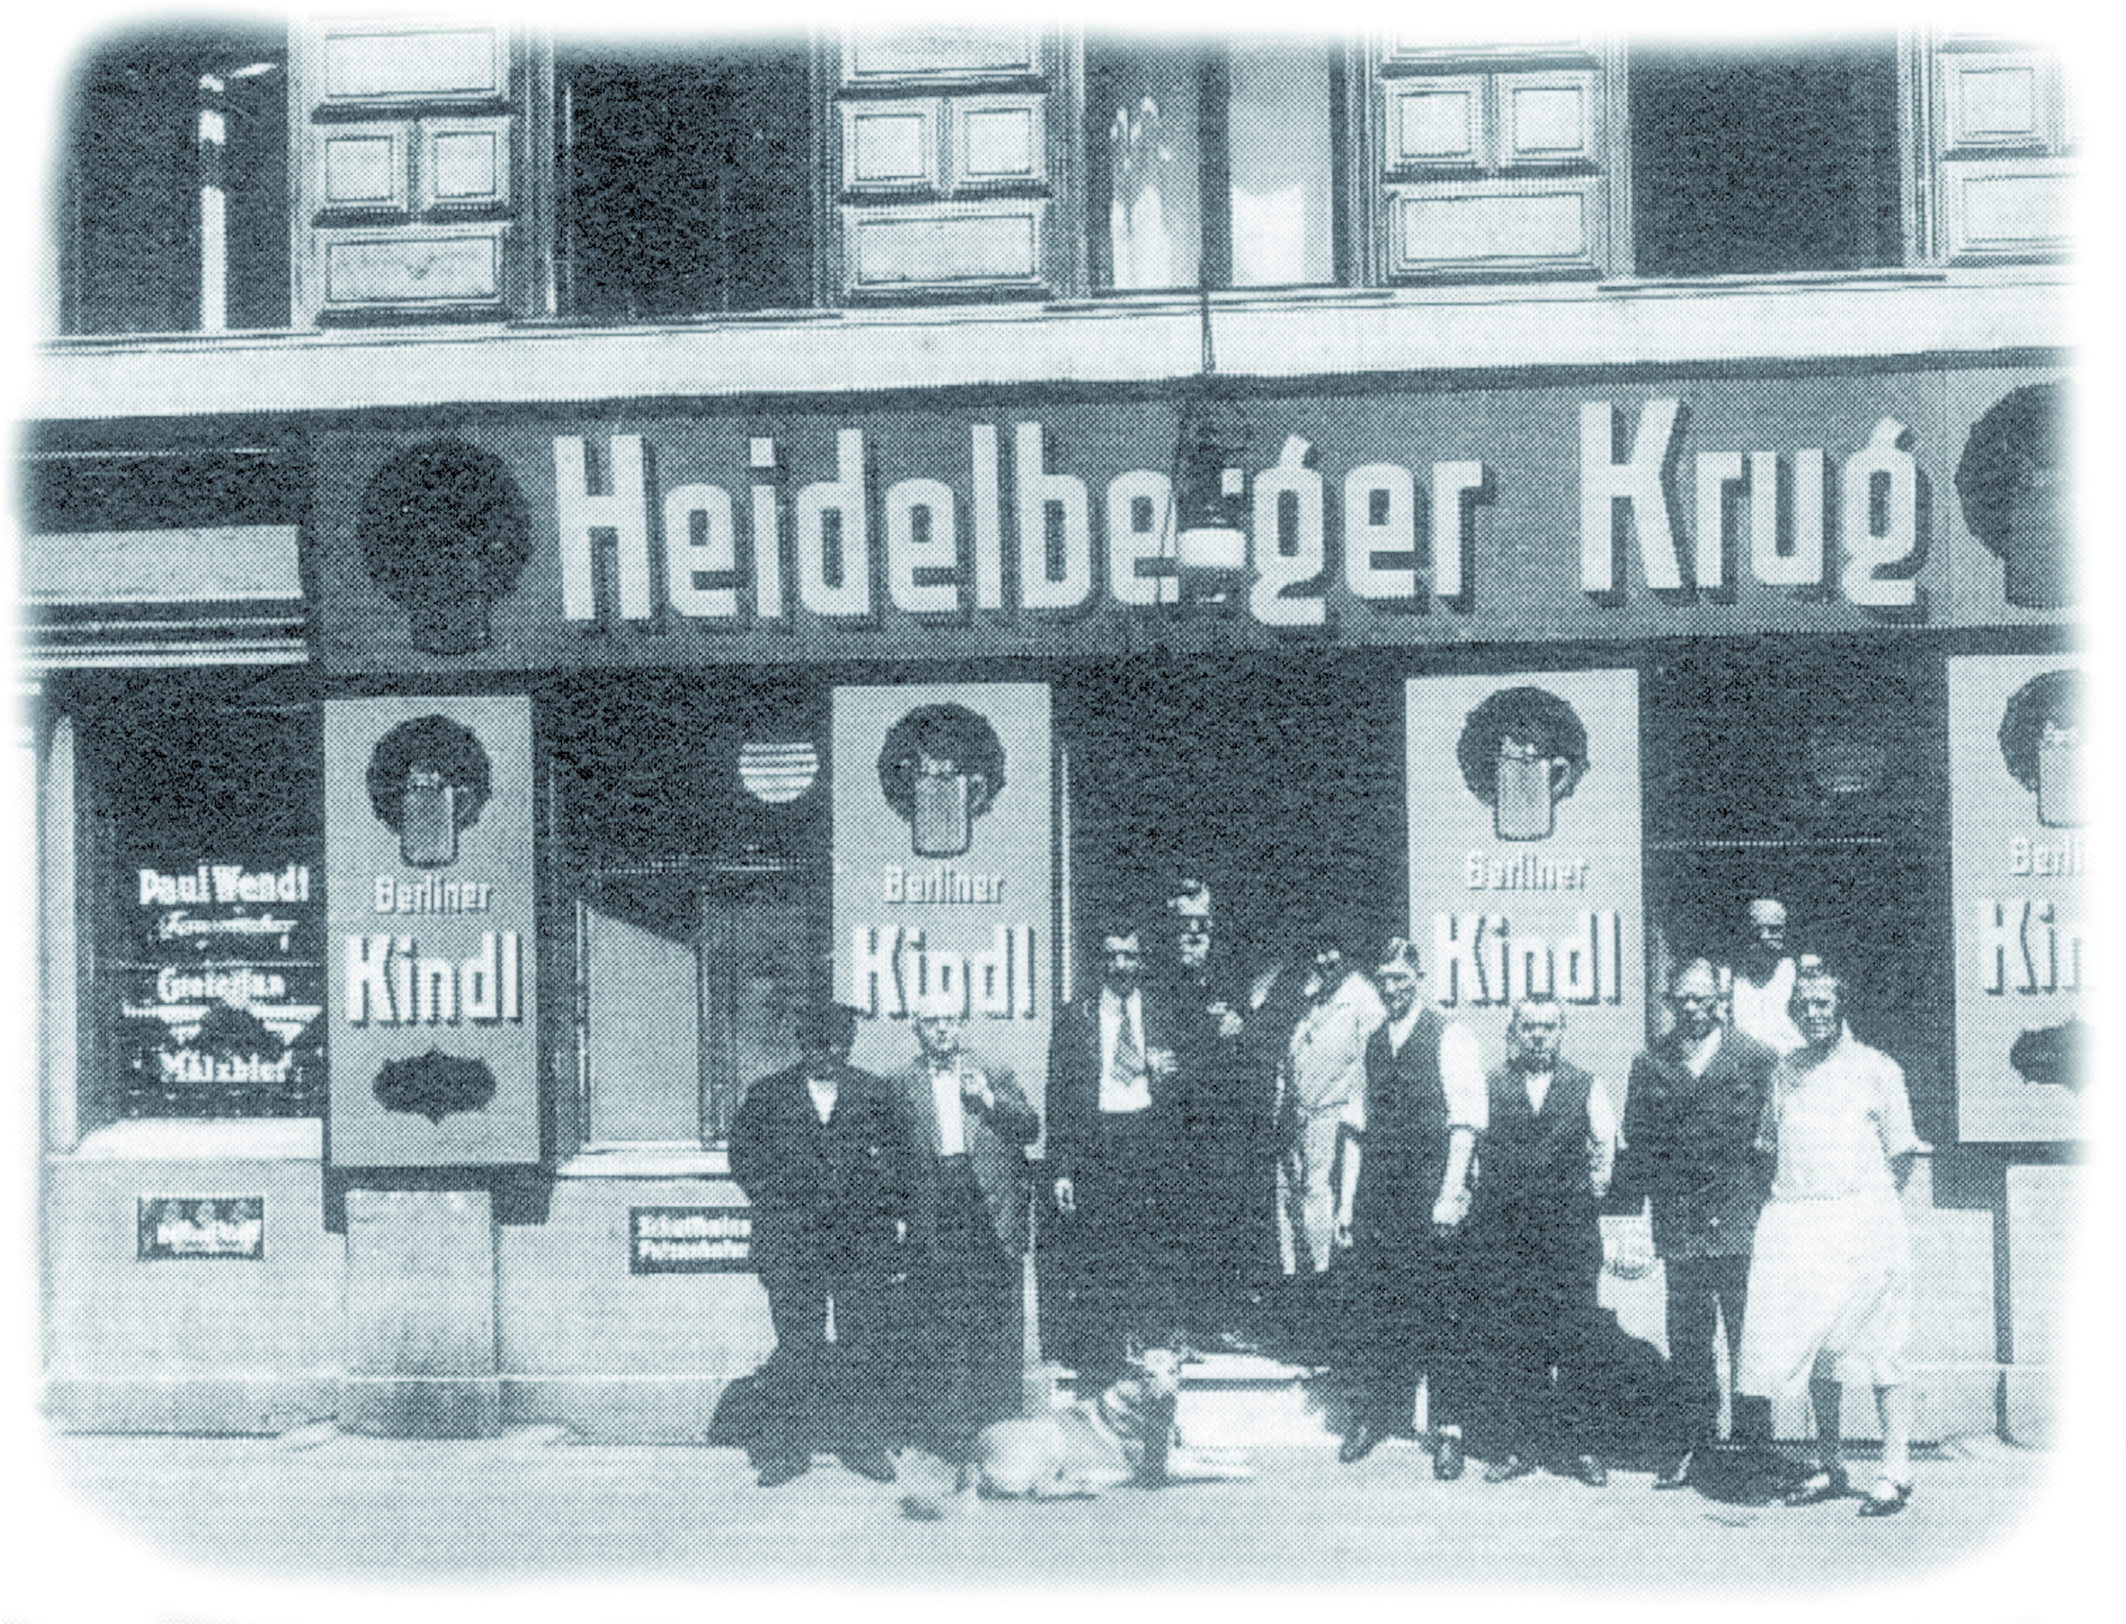 Heidelberger Krug